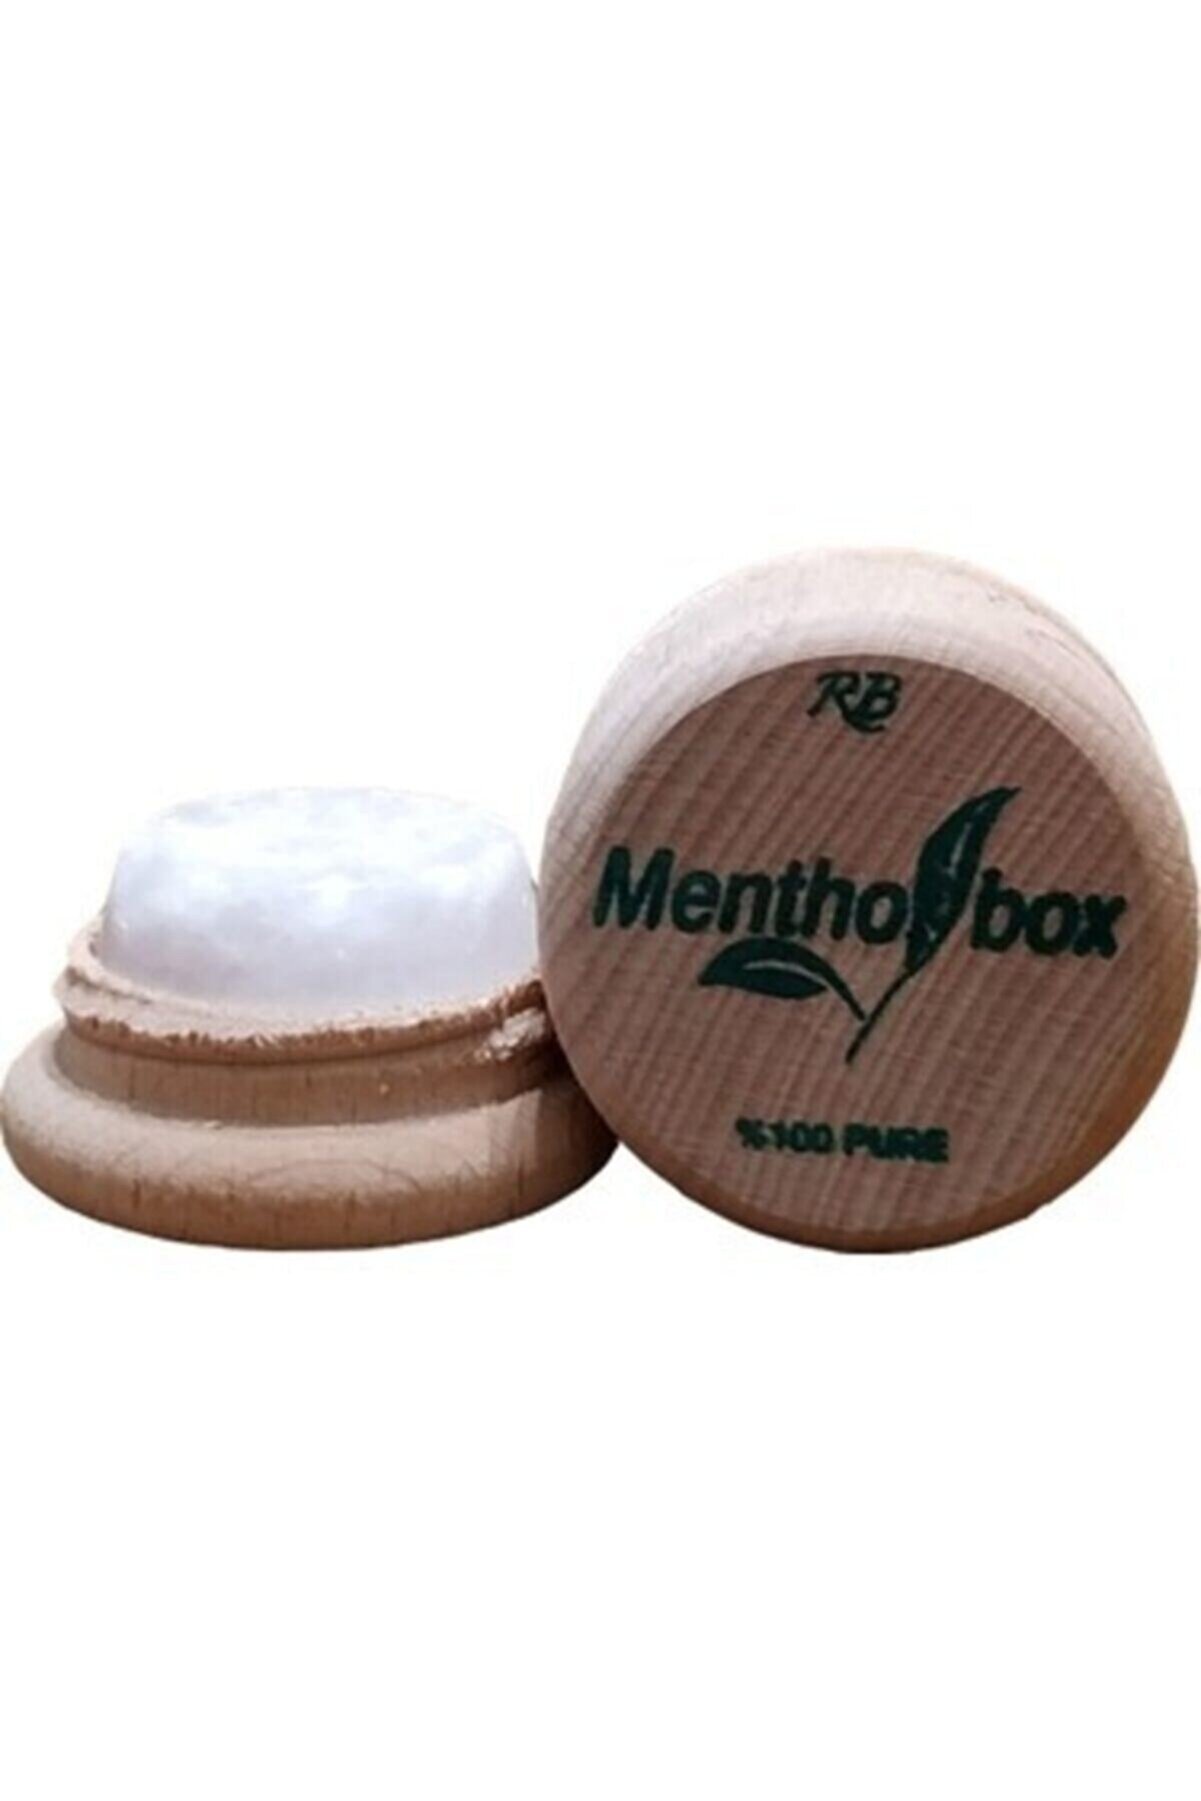 Natural Menthol 6 g / 0.21 Oz, Turkish Pure Migraine Stone – Menthol Box